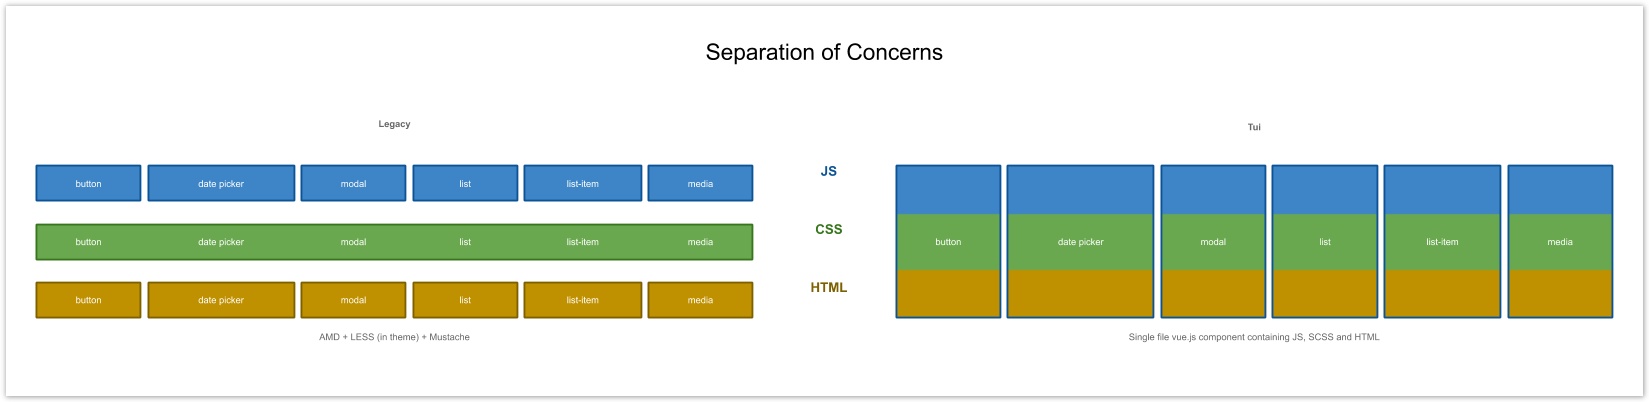 Separation of concerns diagram.